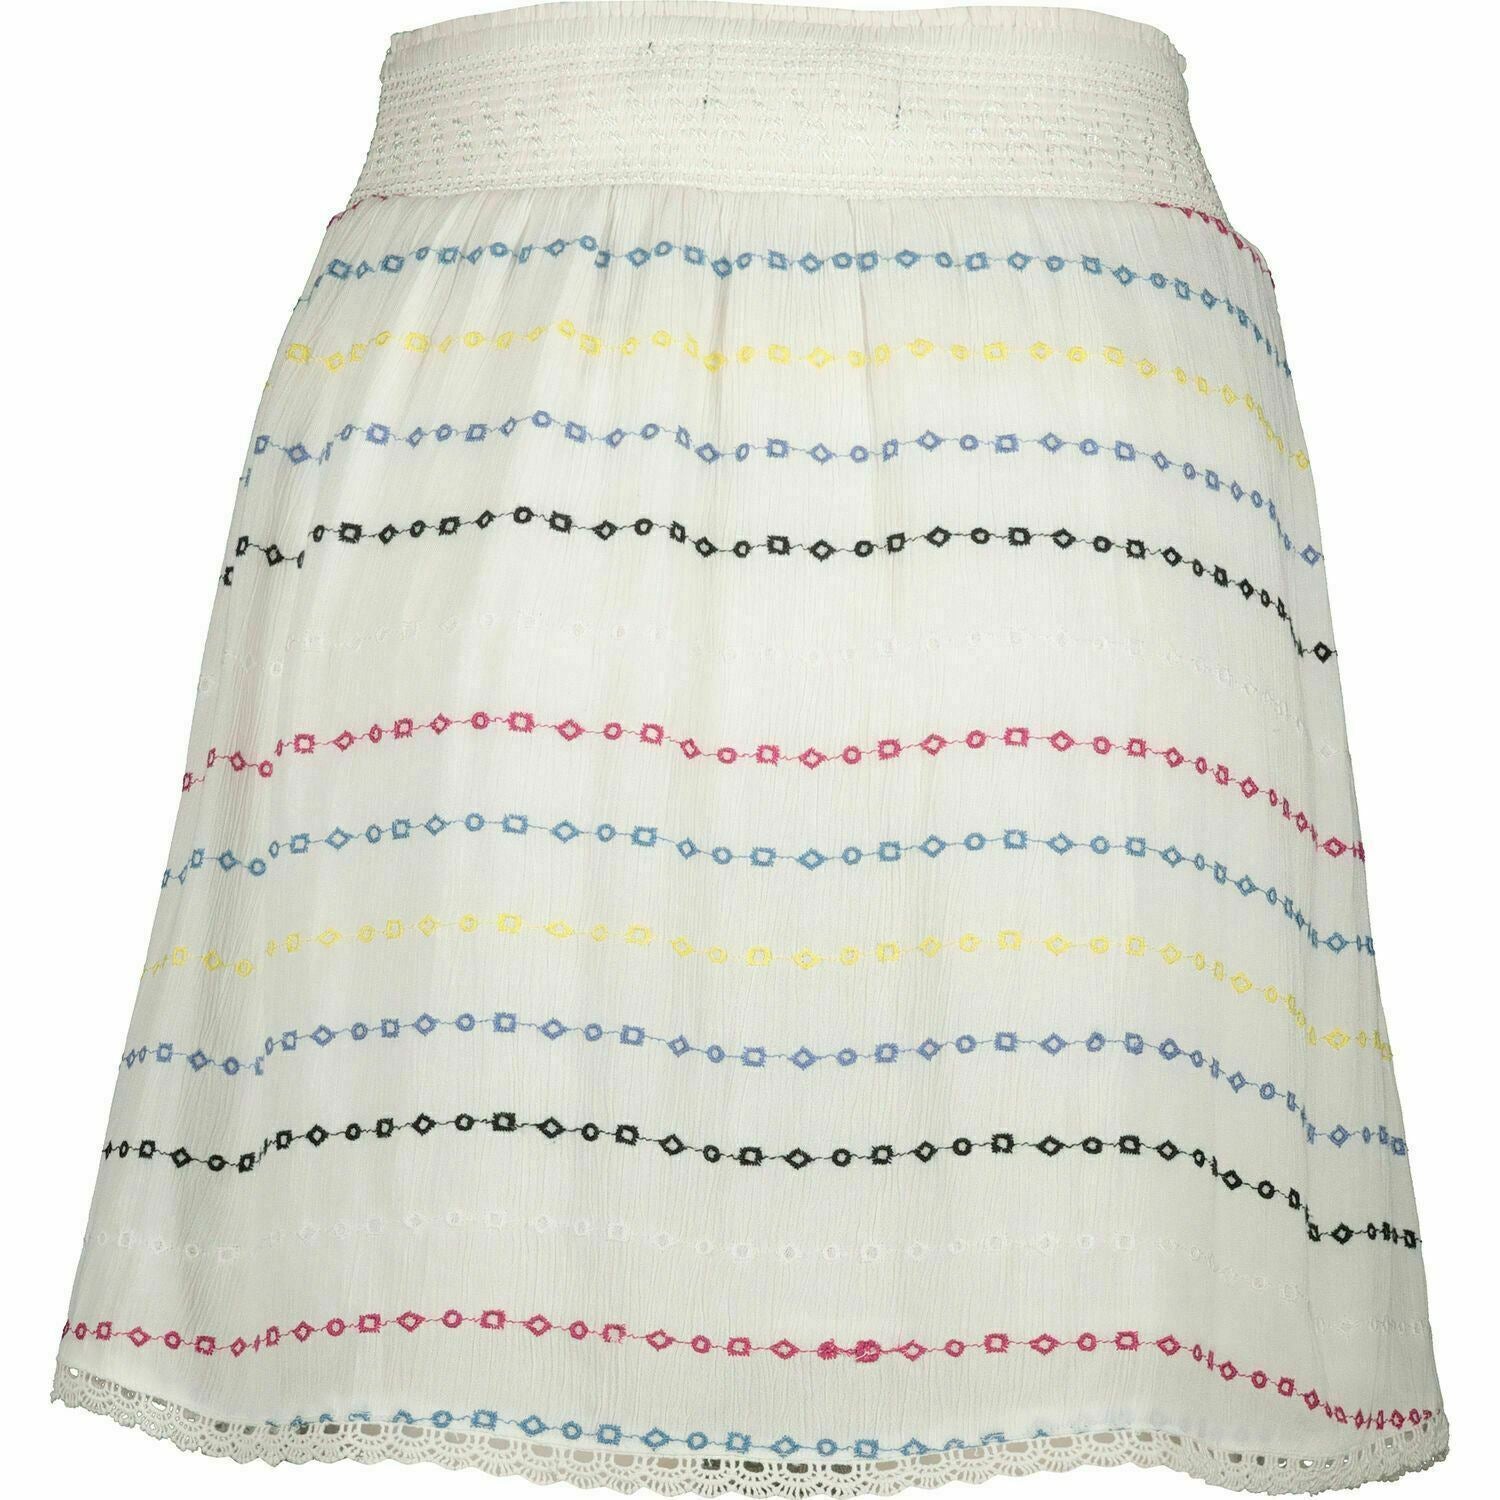 SUPERDRY Women's SARA Smocking Skirt, White/Geo, size XXS / UK 6